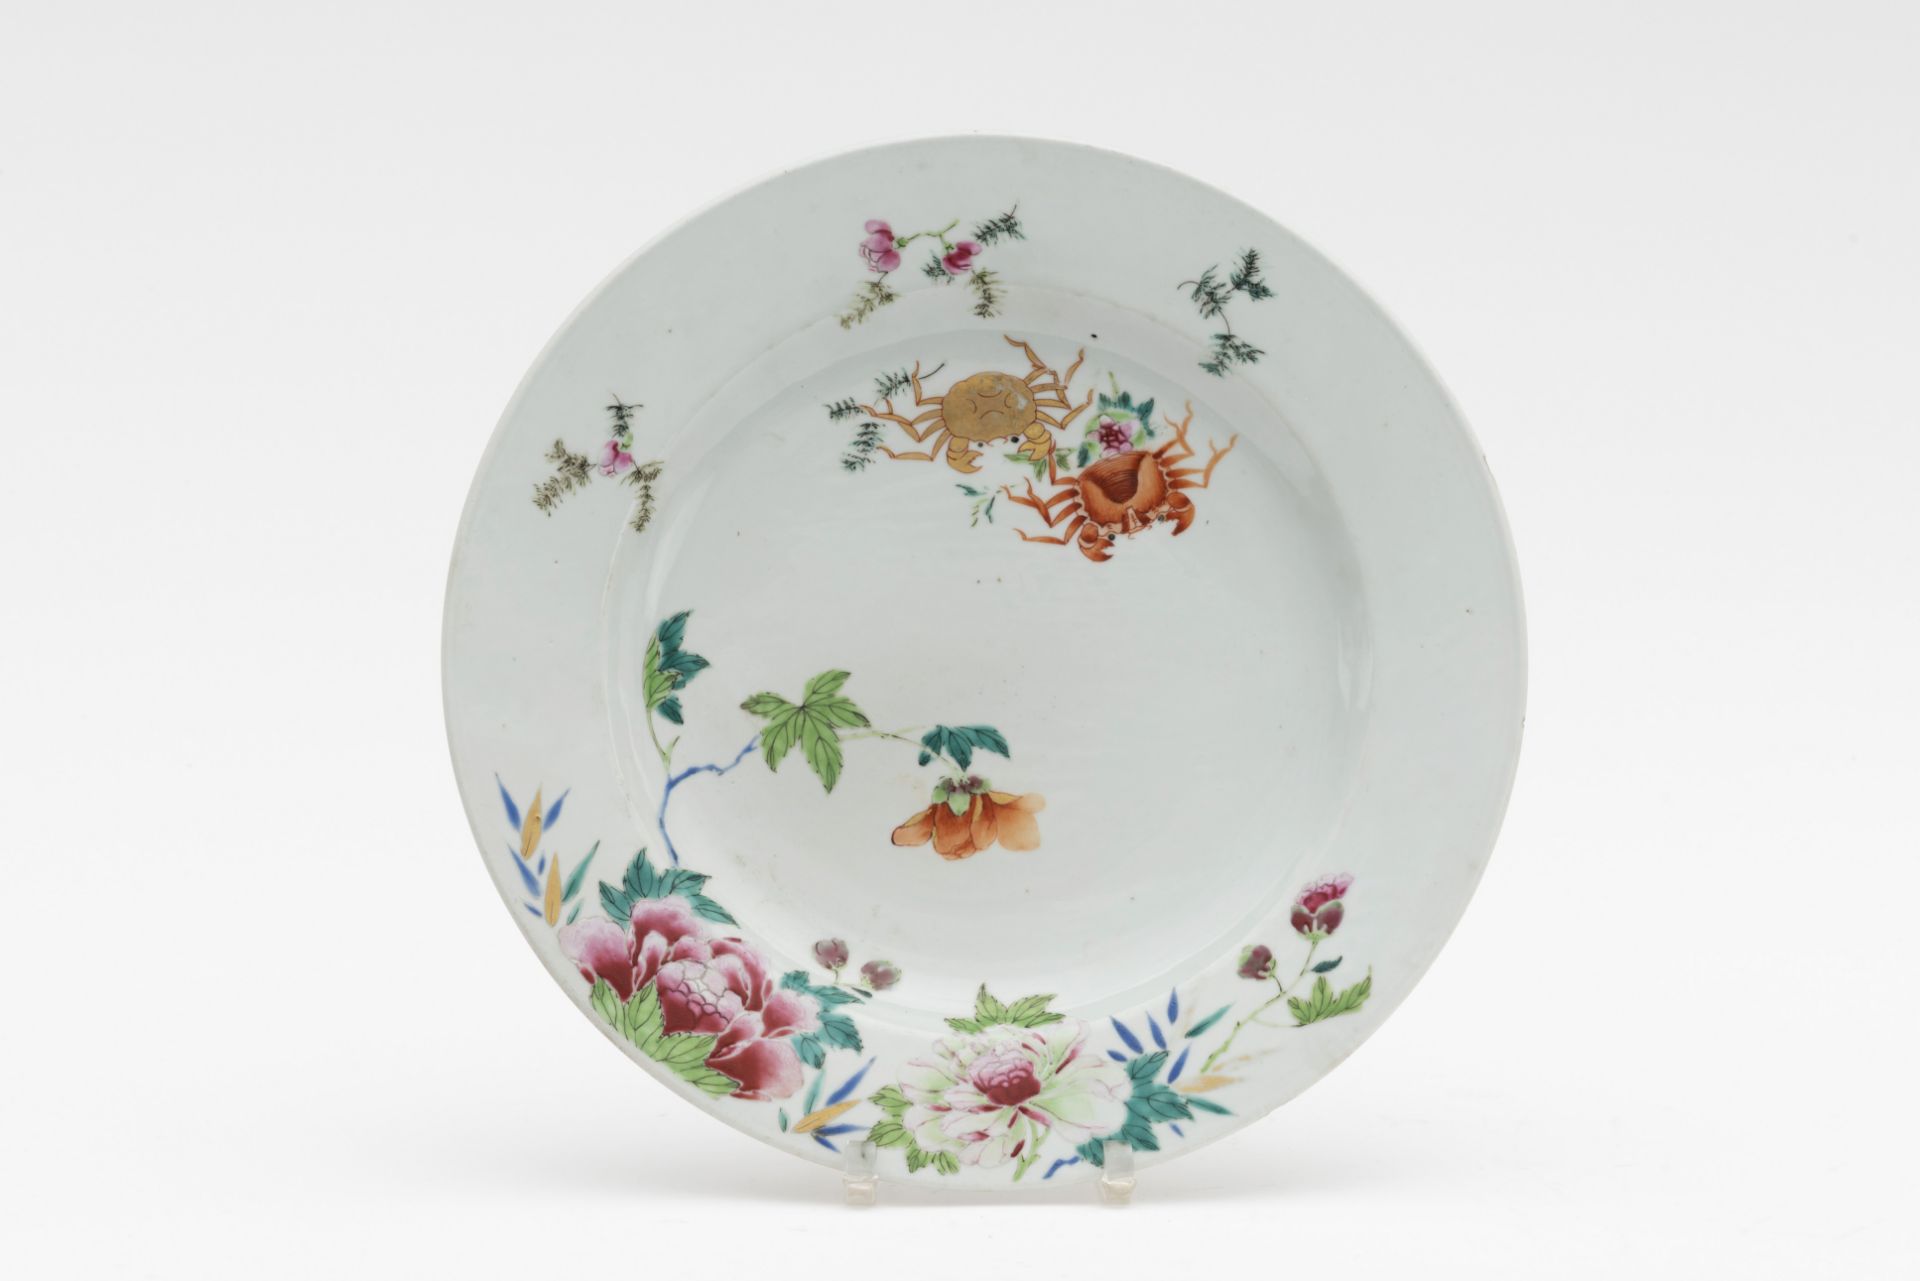 CHINE. Grand plat en porcelaine. Epoque Yongzheng (1723-1735)